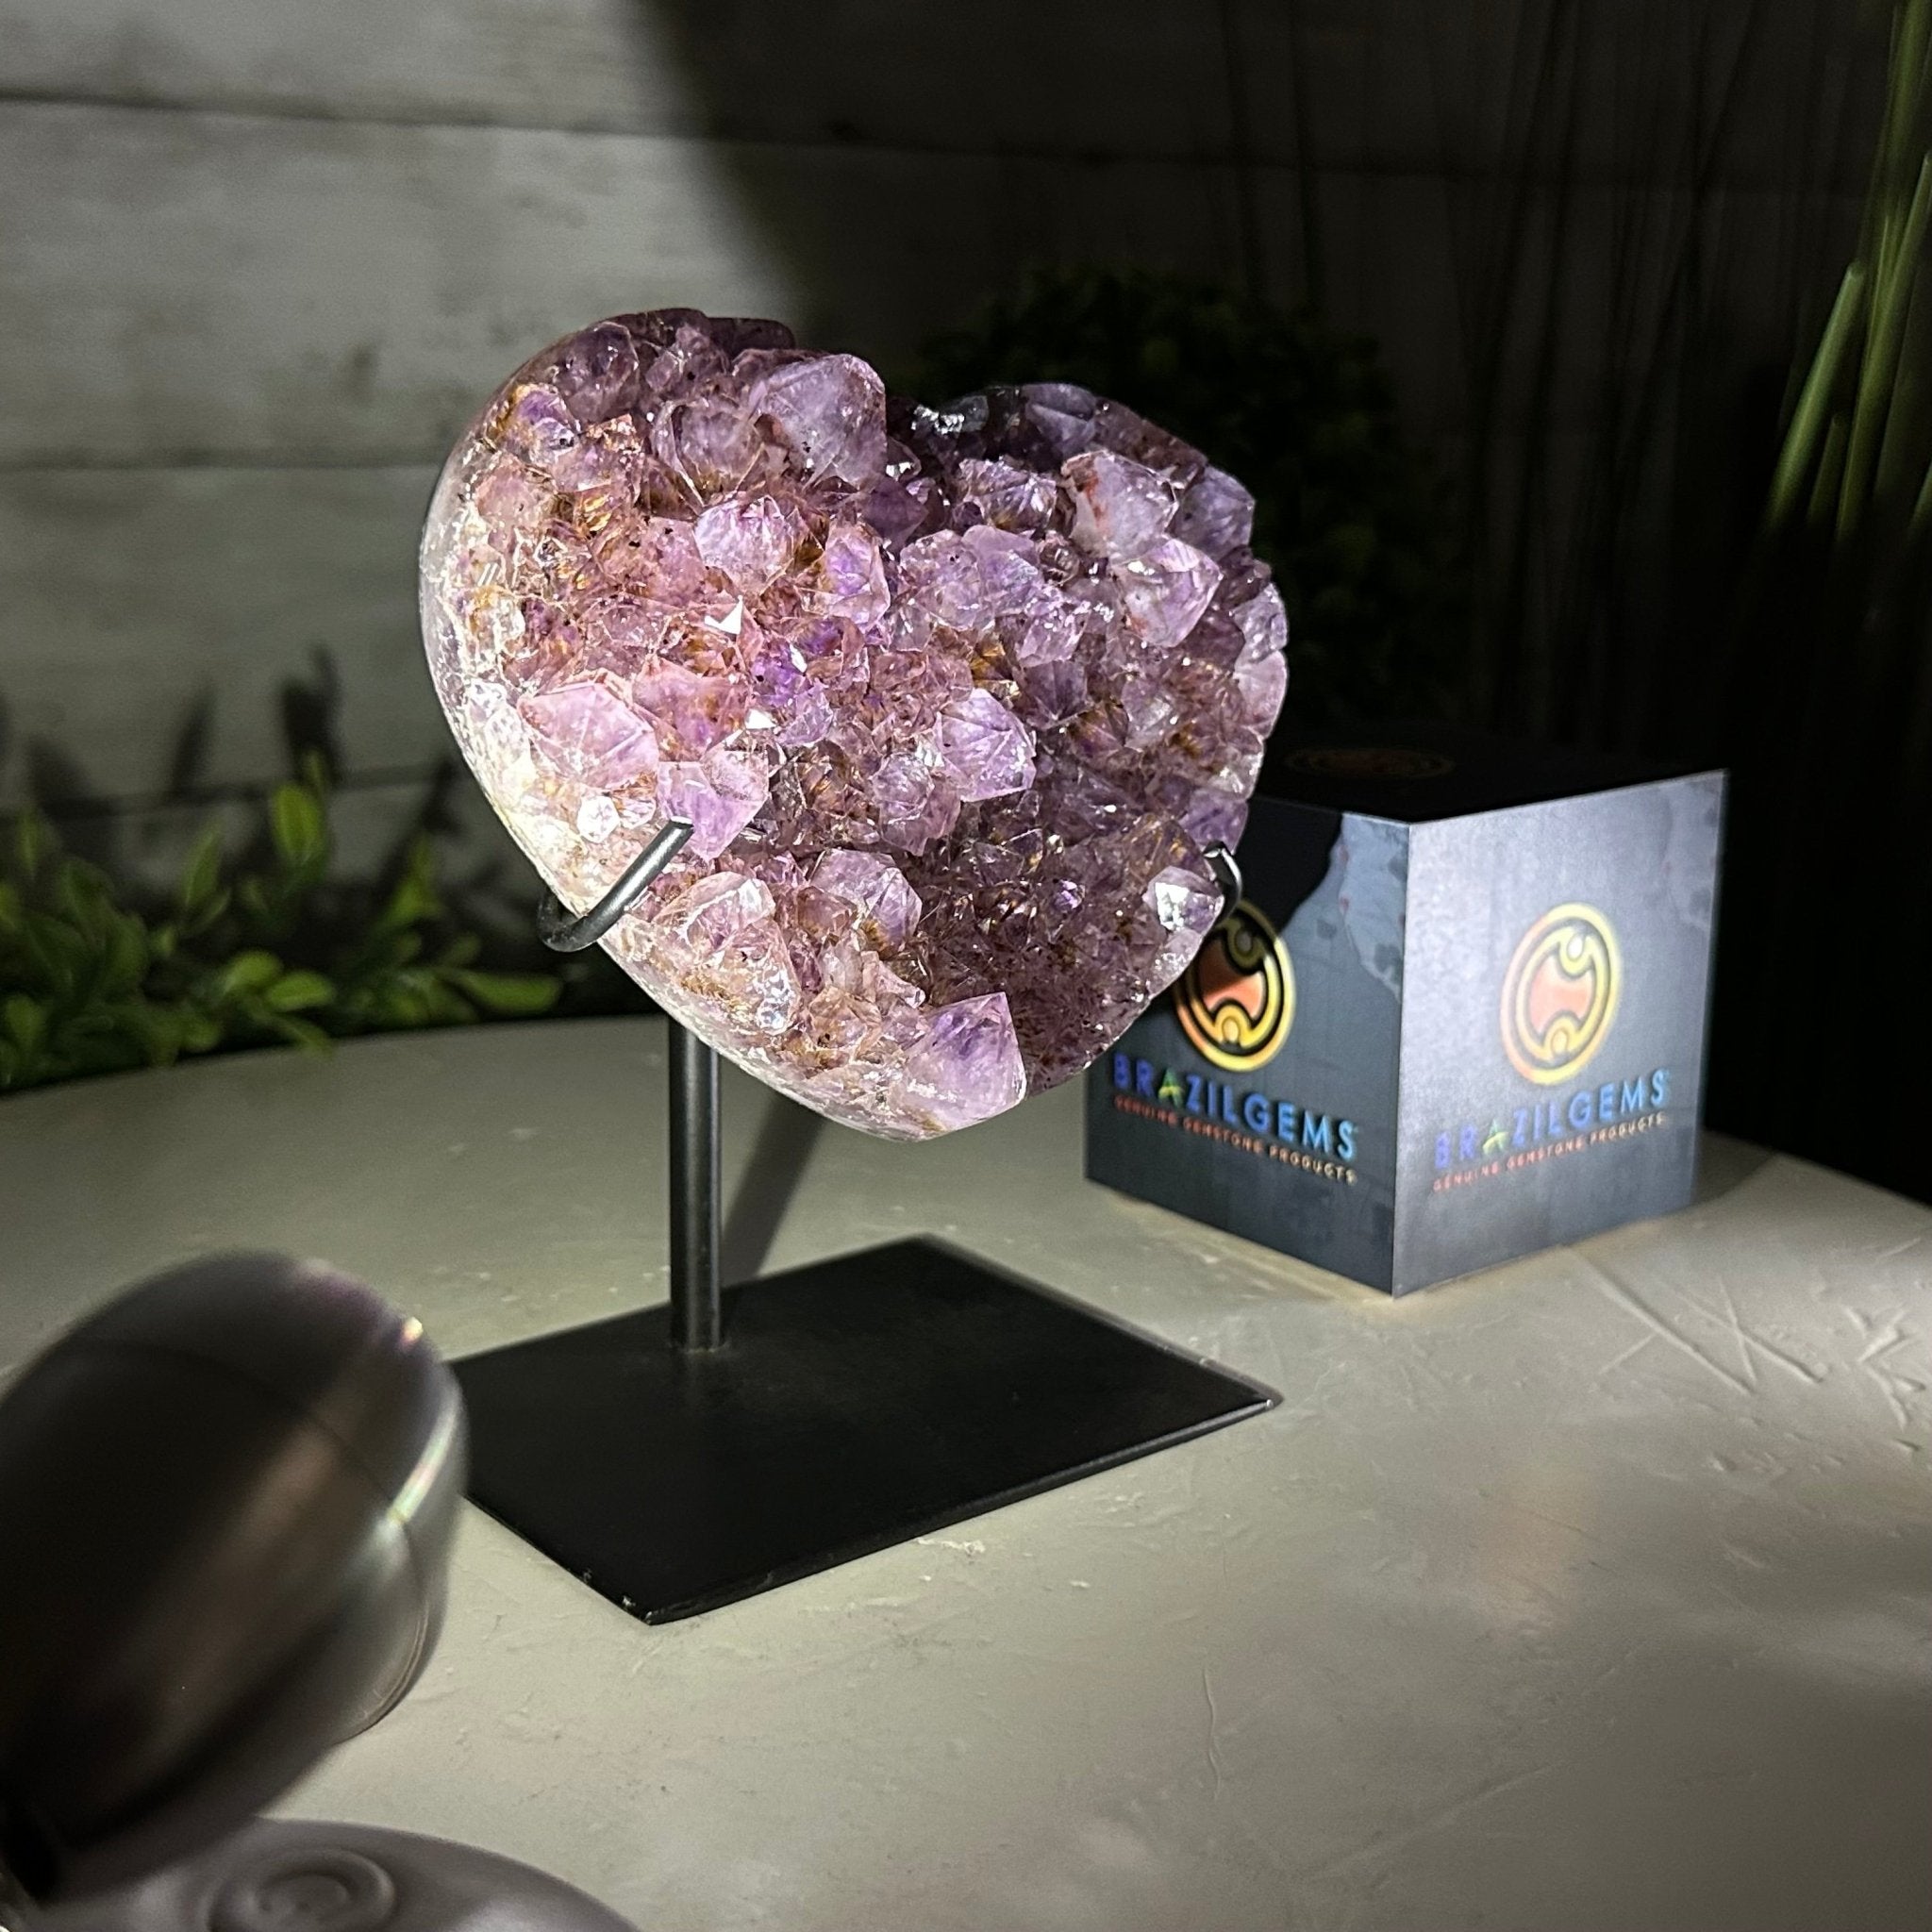 Amethyst Heart Geode w/ metal stand, 1.6 lbs & 5.1" Tall #5463-0303 - Brazil GemsBrazil GemsAmethyst Heart Geode w/ metal stand, 1.6 lbs & 5.1" Tall #5463-0303Hearts5463-0303